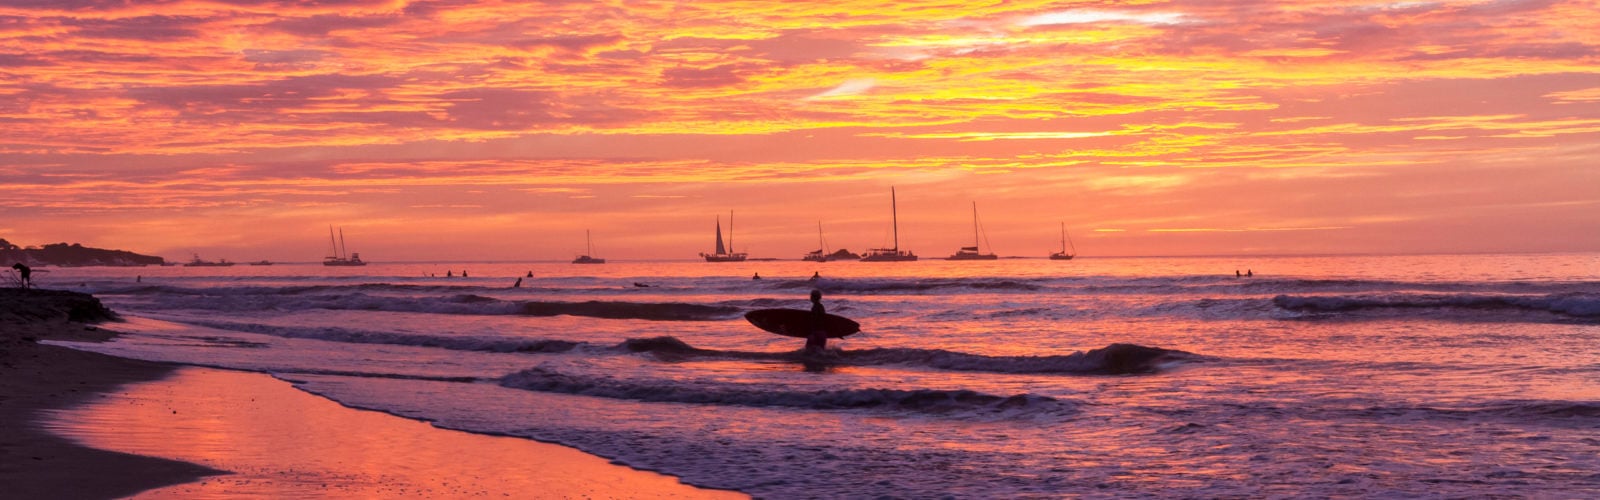 Surfboard Sunset, Silhouette